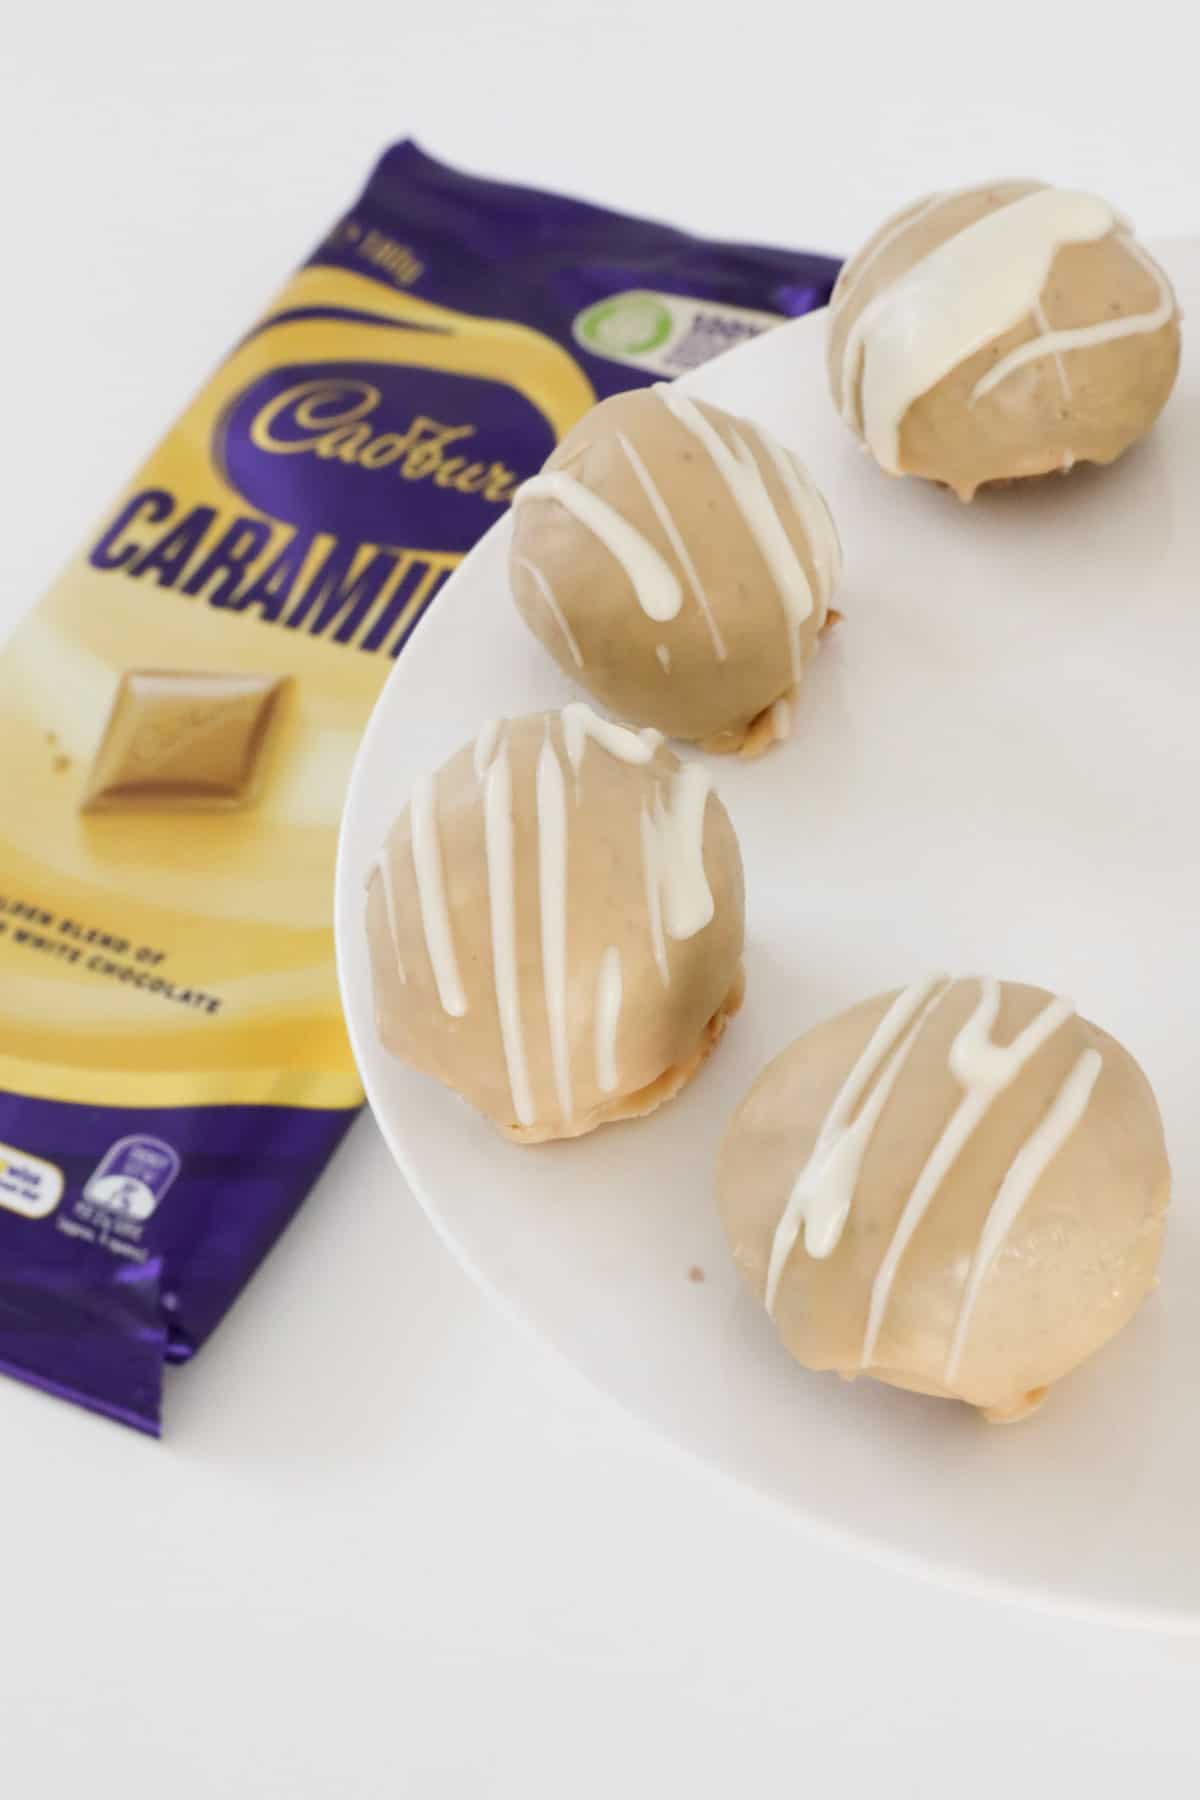 A close up of Caramilk Cheesecake balls with a block of Caramilk chocolate beside.